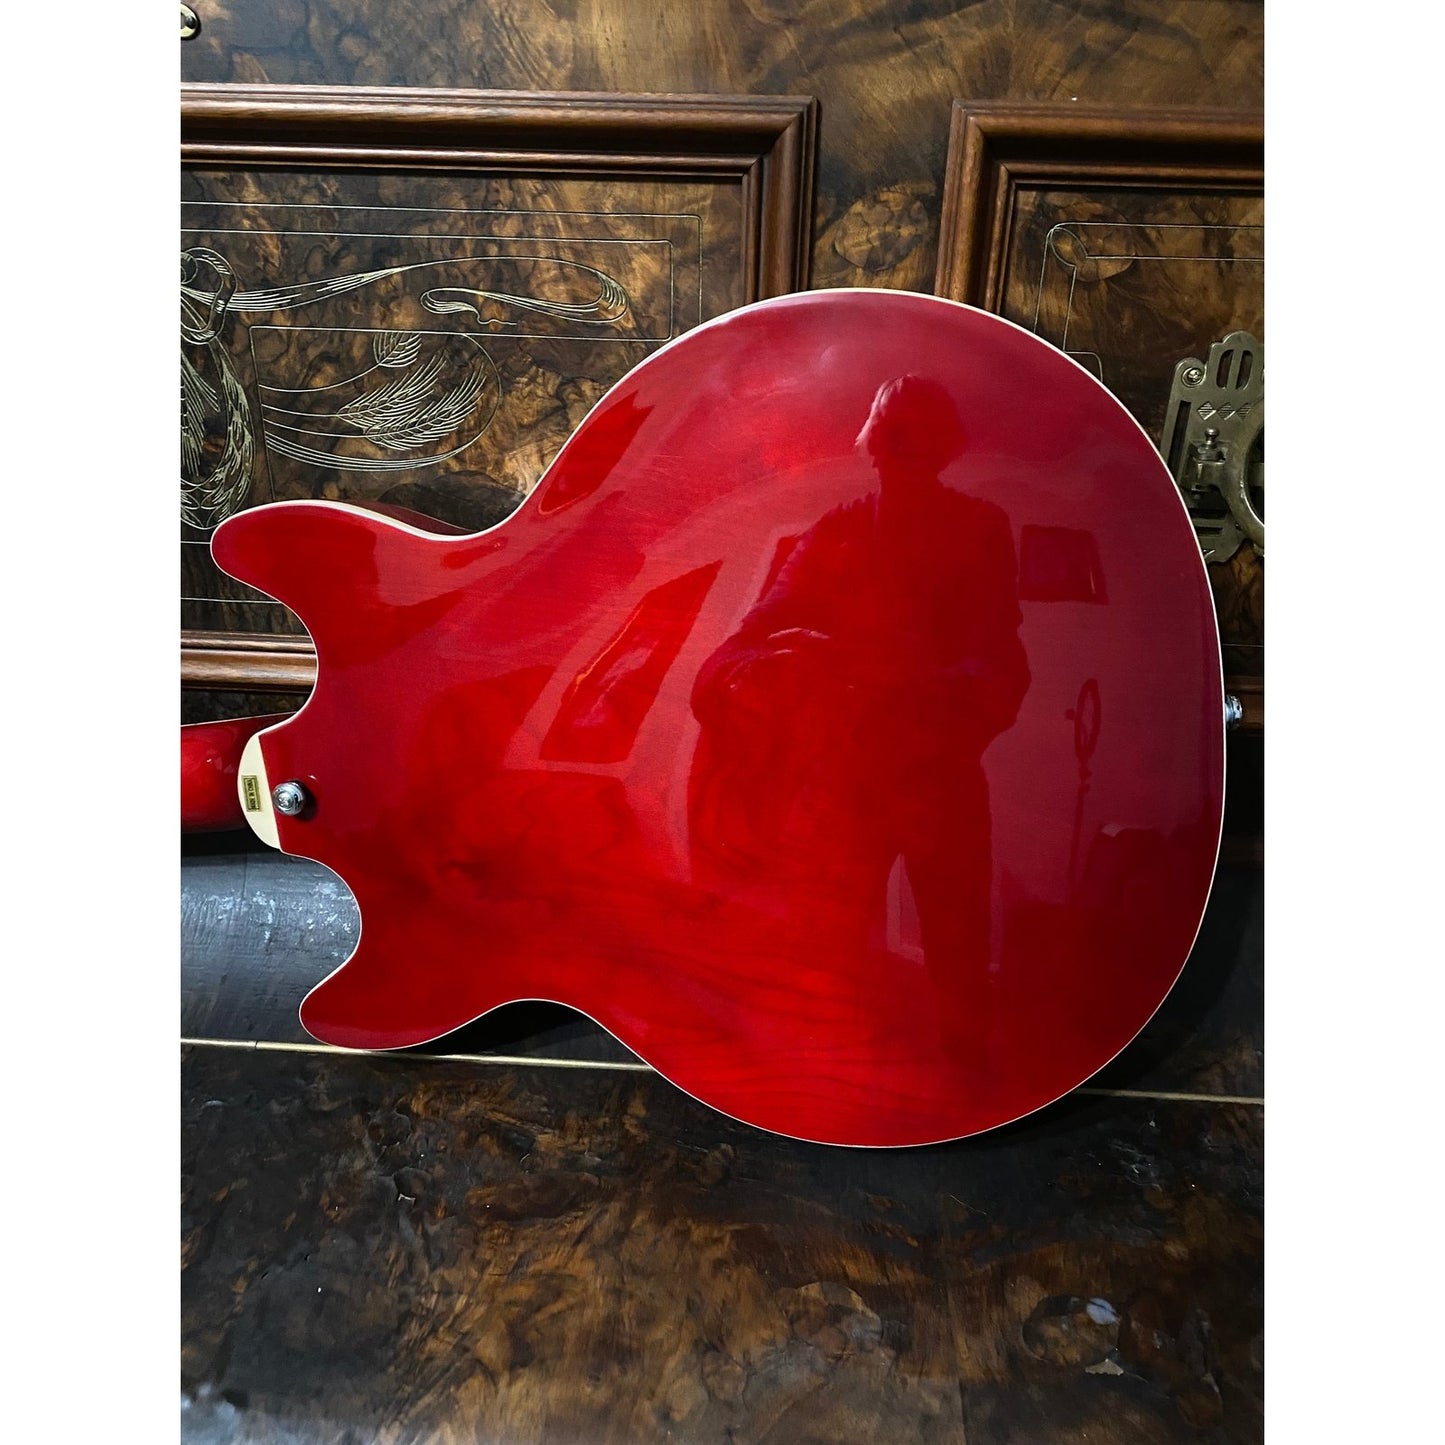 Hagstrom Alvar Semi-Hollow Guitar in Wild Cherry Transparent Gloss